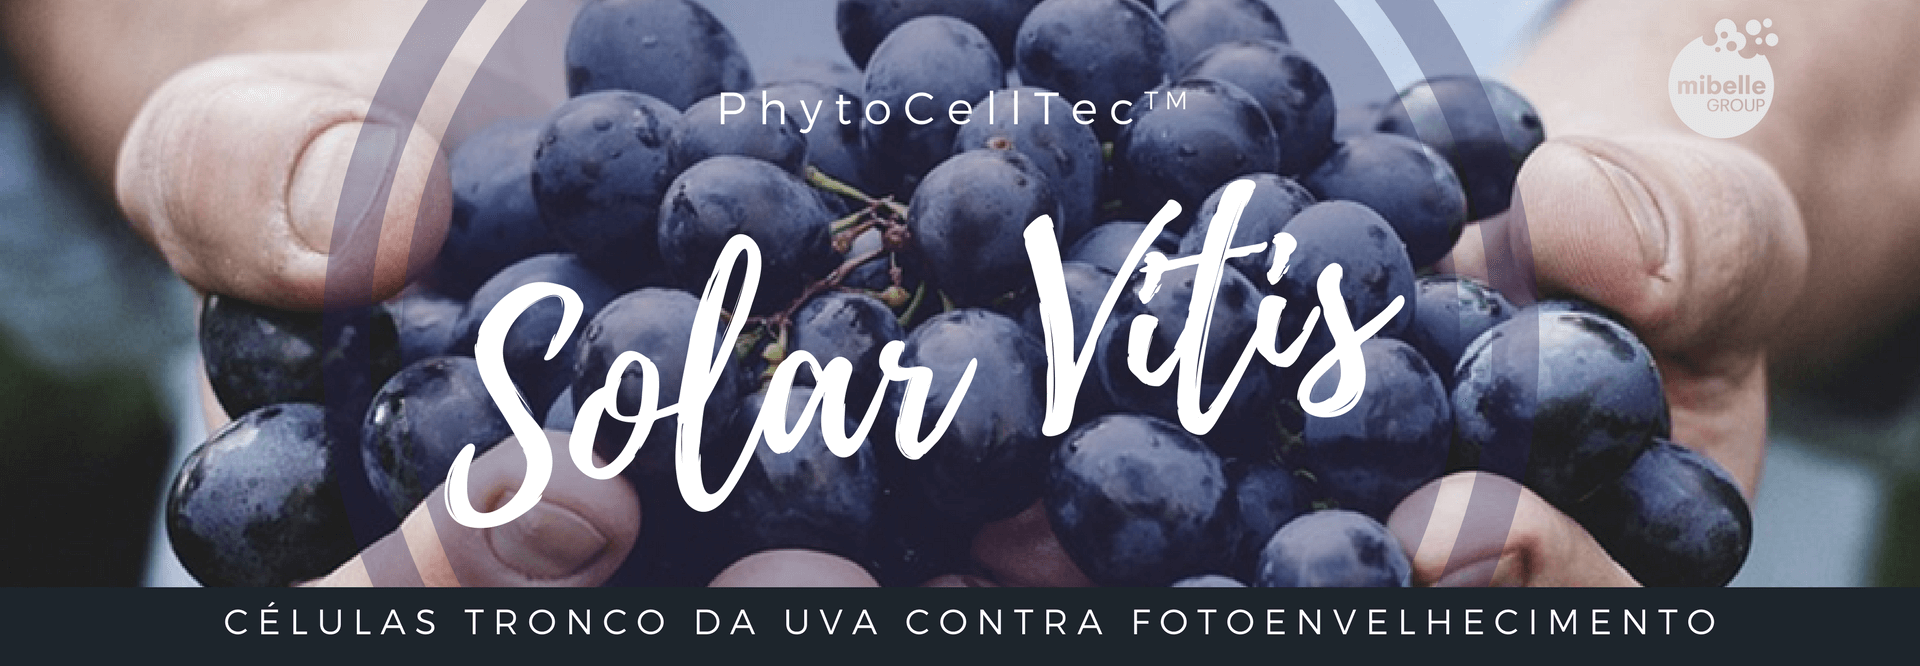 PhytoCellTec™ Solar Vitis